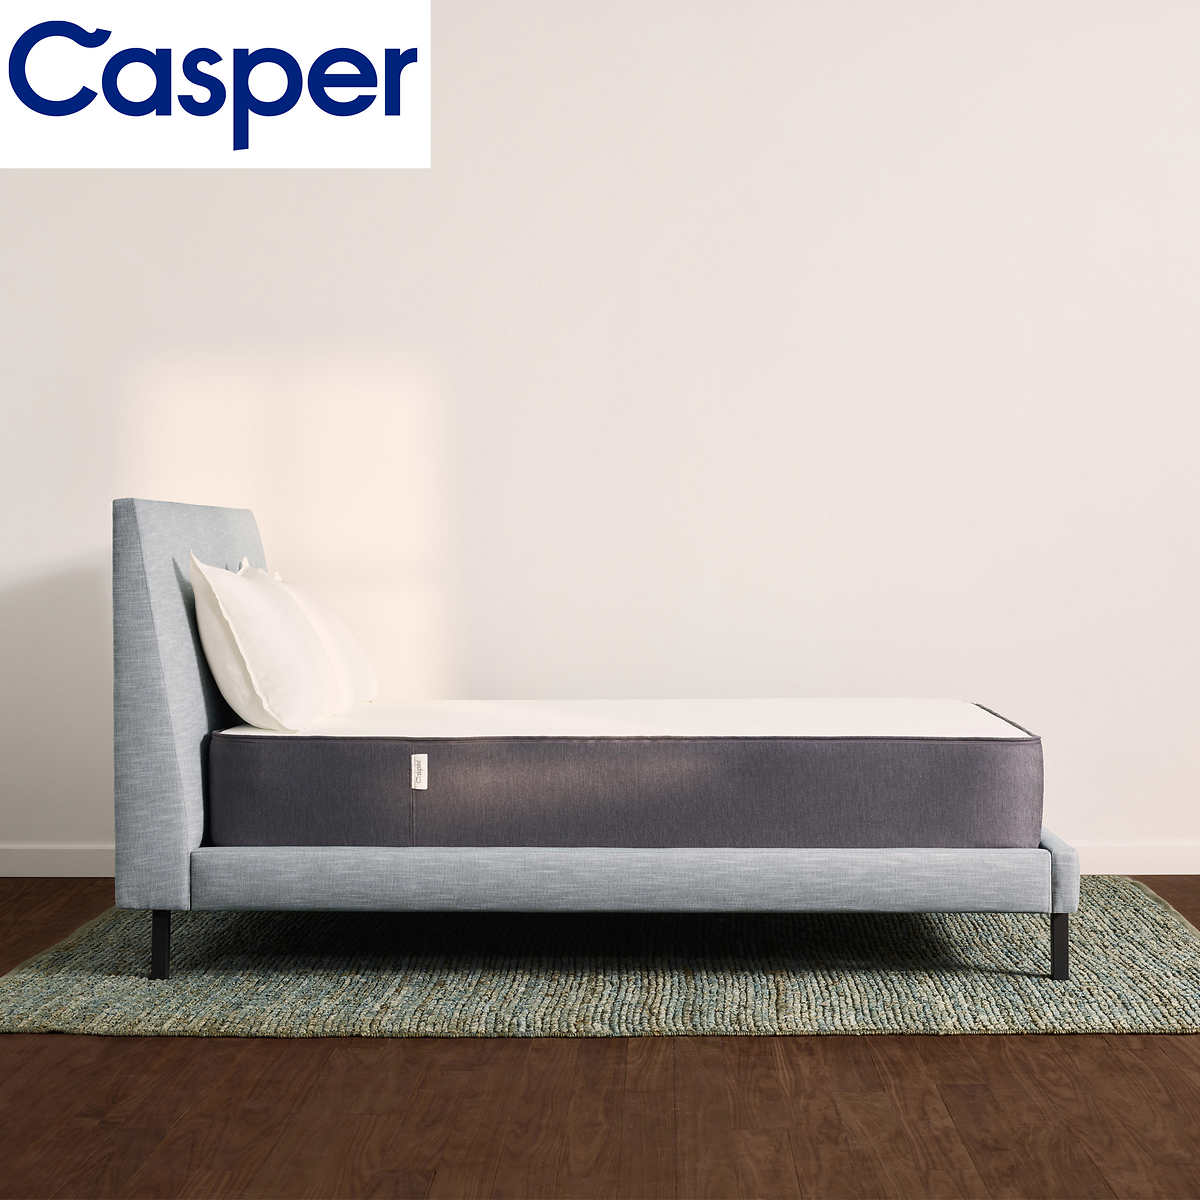 Casper Hybrid Medium | Costco